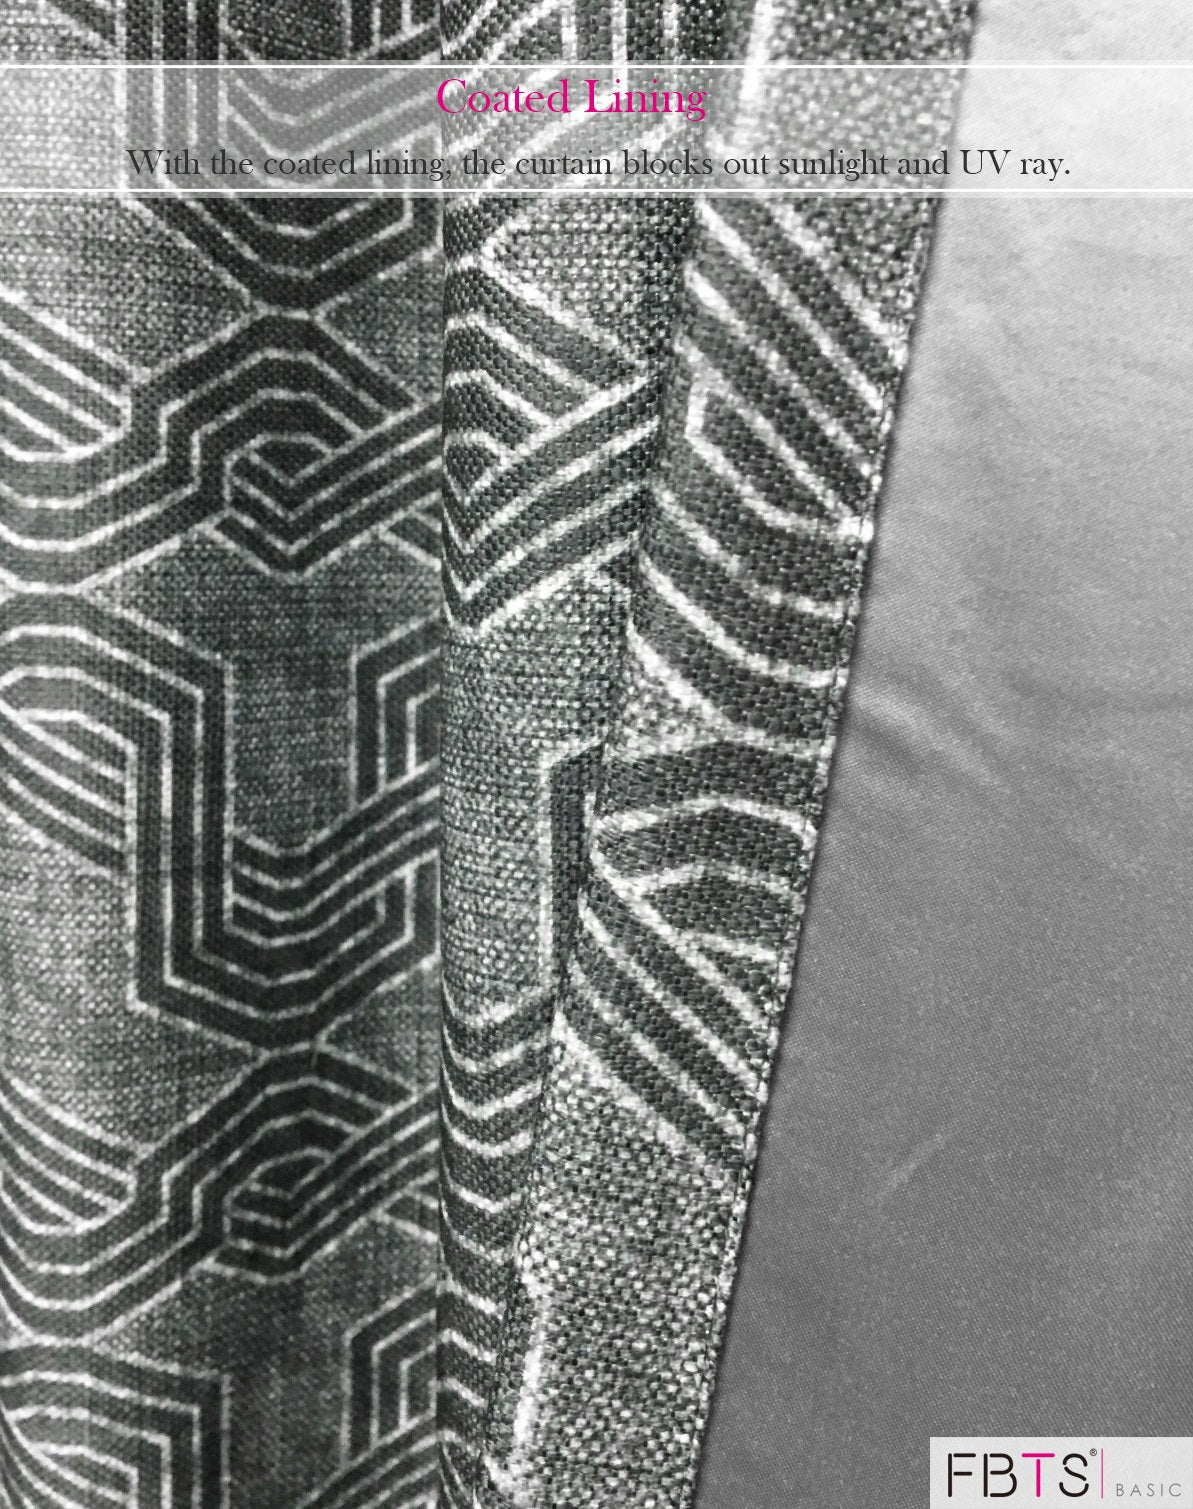 Window Curtain 1 Panel 50% Blackout Grey Color Geometric Pattern Custom Made Window Drapes